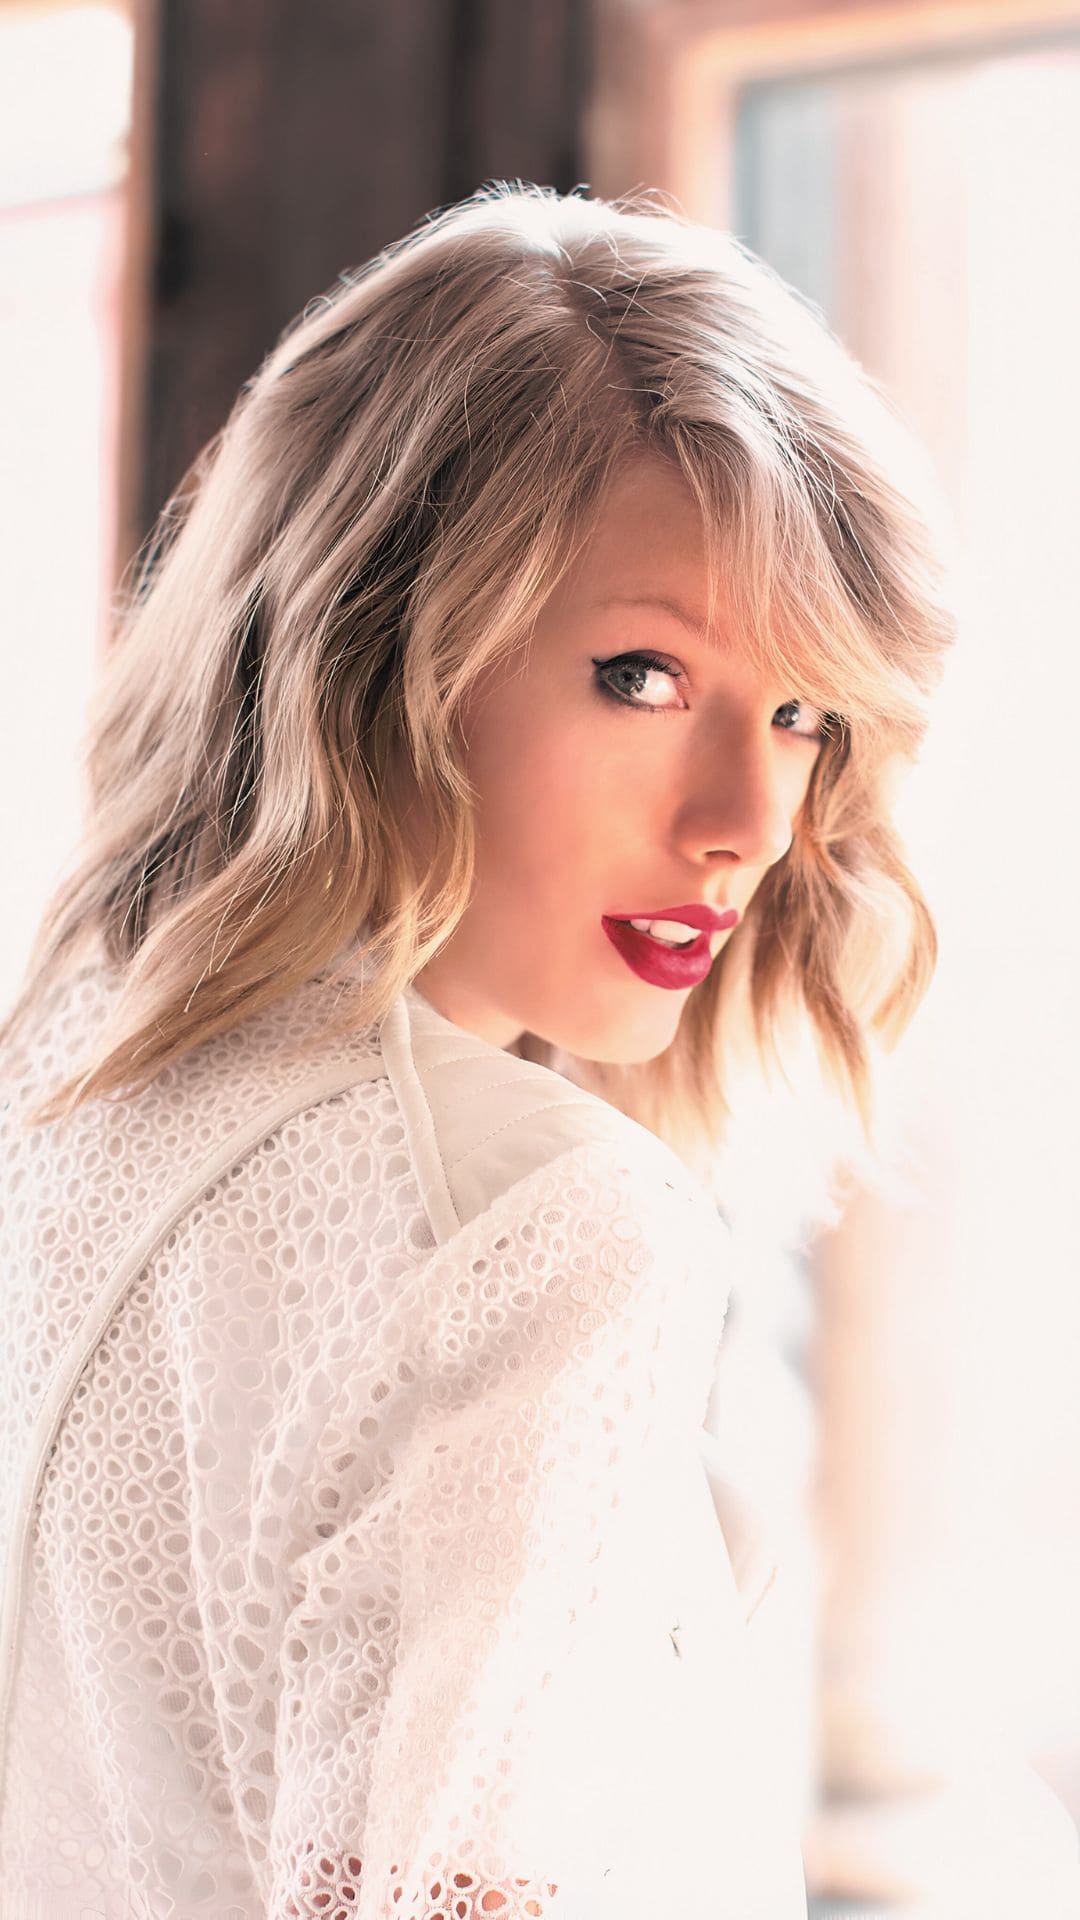 Taylor Swift Wallpaper iPhone